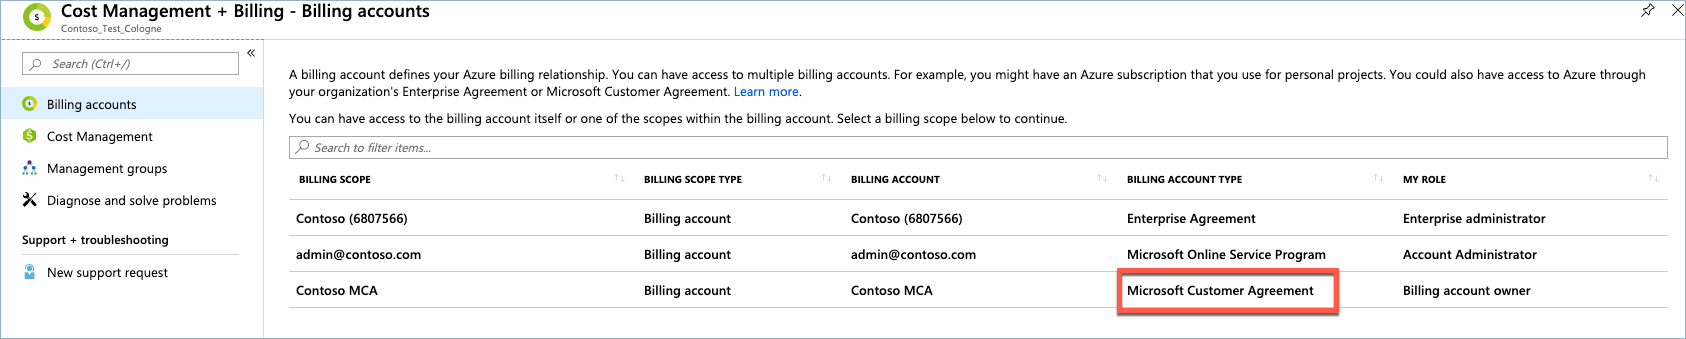 Microsoft Customer Agreement, Billing Account Type, Billing account list, Microsoft Azure portal